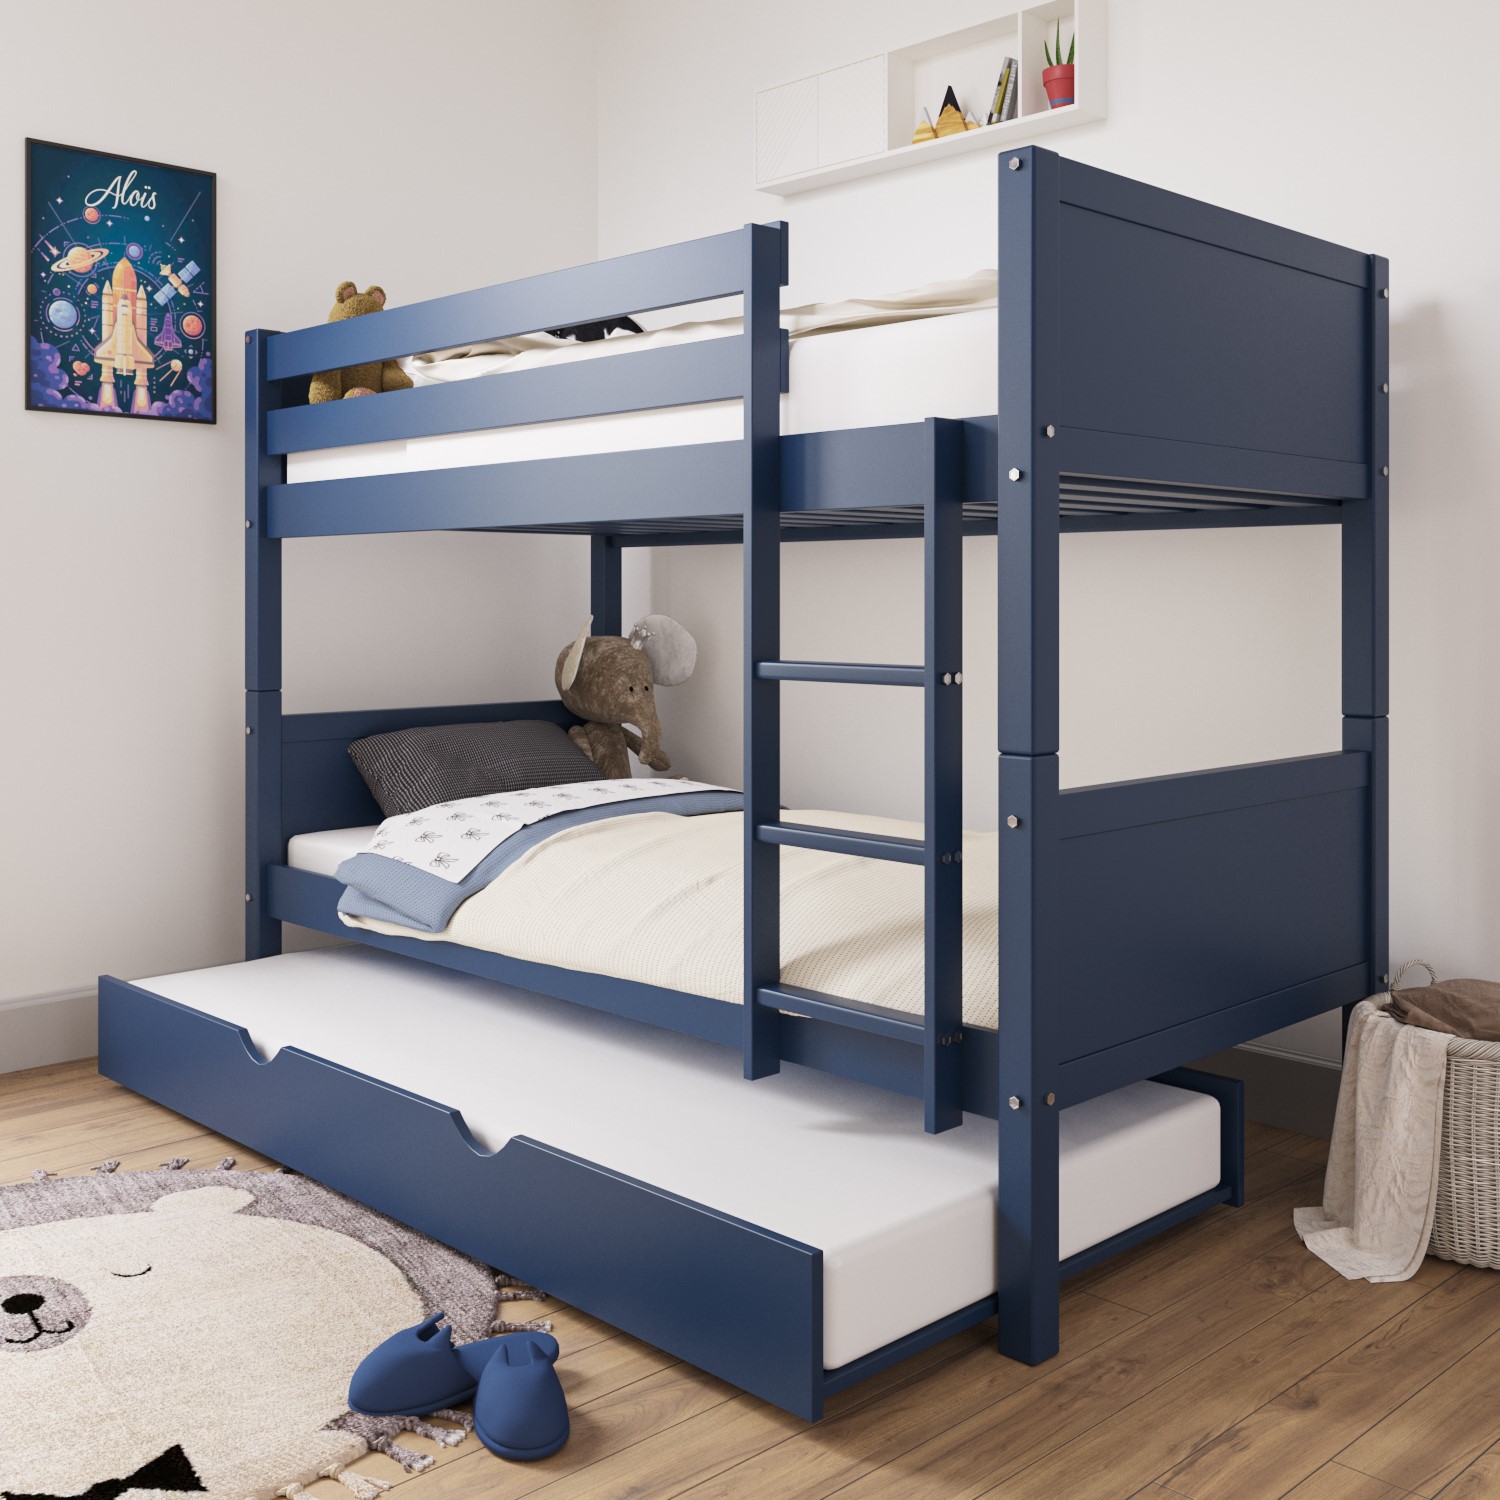 Navy Blue Wooden Bunk Bed With Trundle, Art Van Furniture Bunk Beds